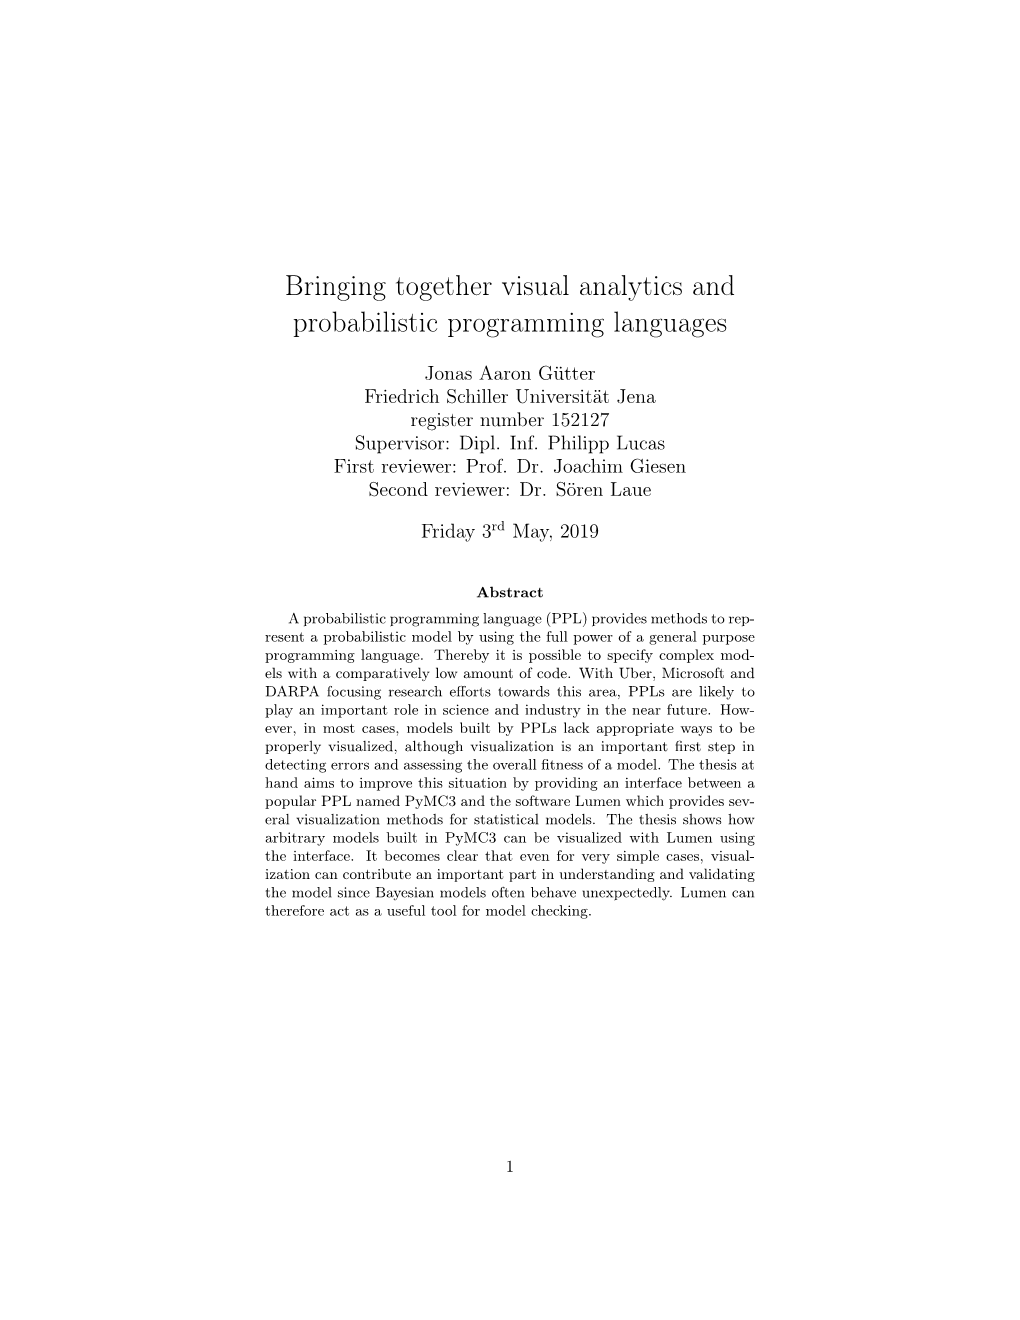 Bringing Together Visual Analytics and Probabilistic Programming Languages